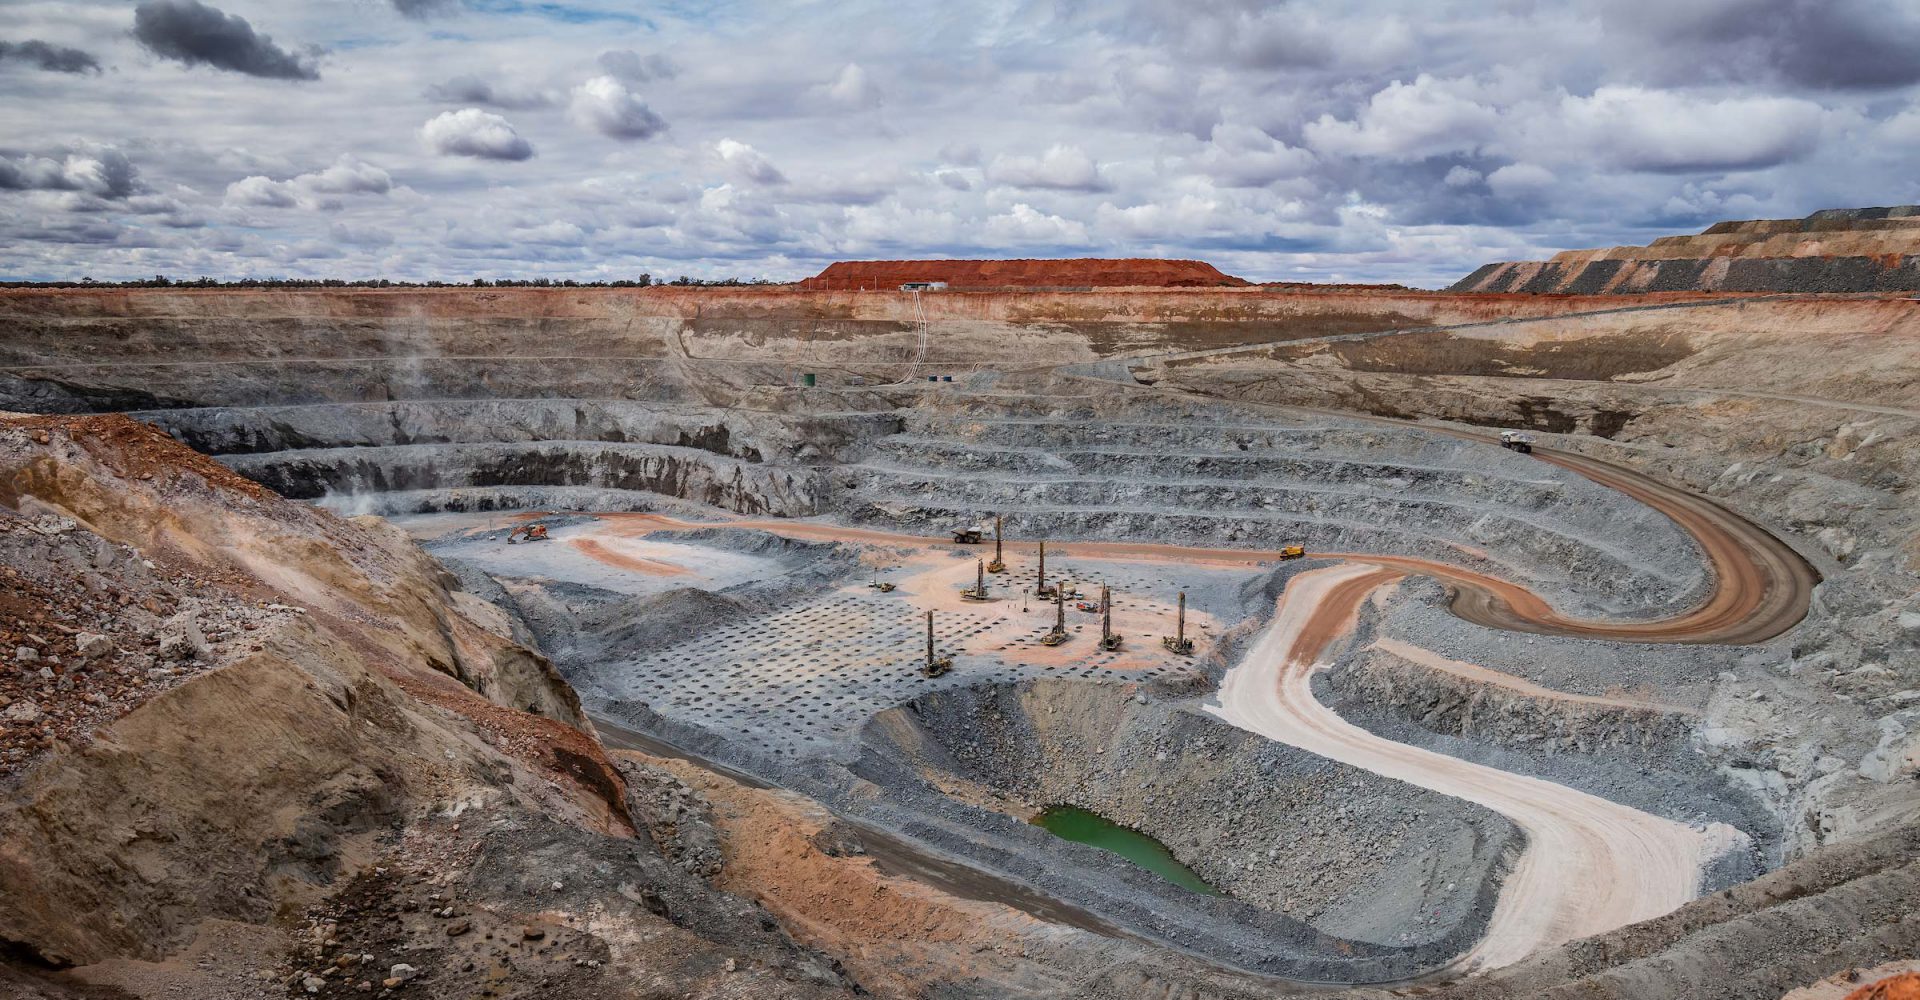 Swift gets three-year extension at Tropicana gold mine - International Mining